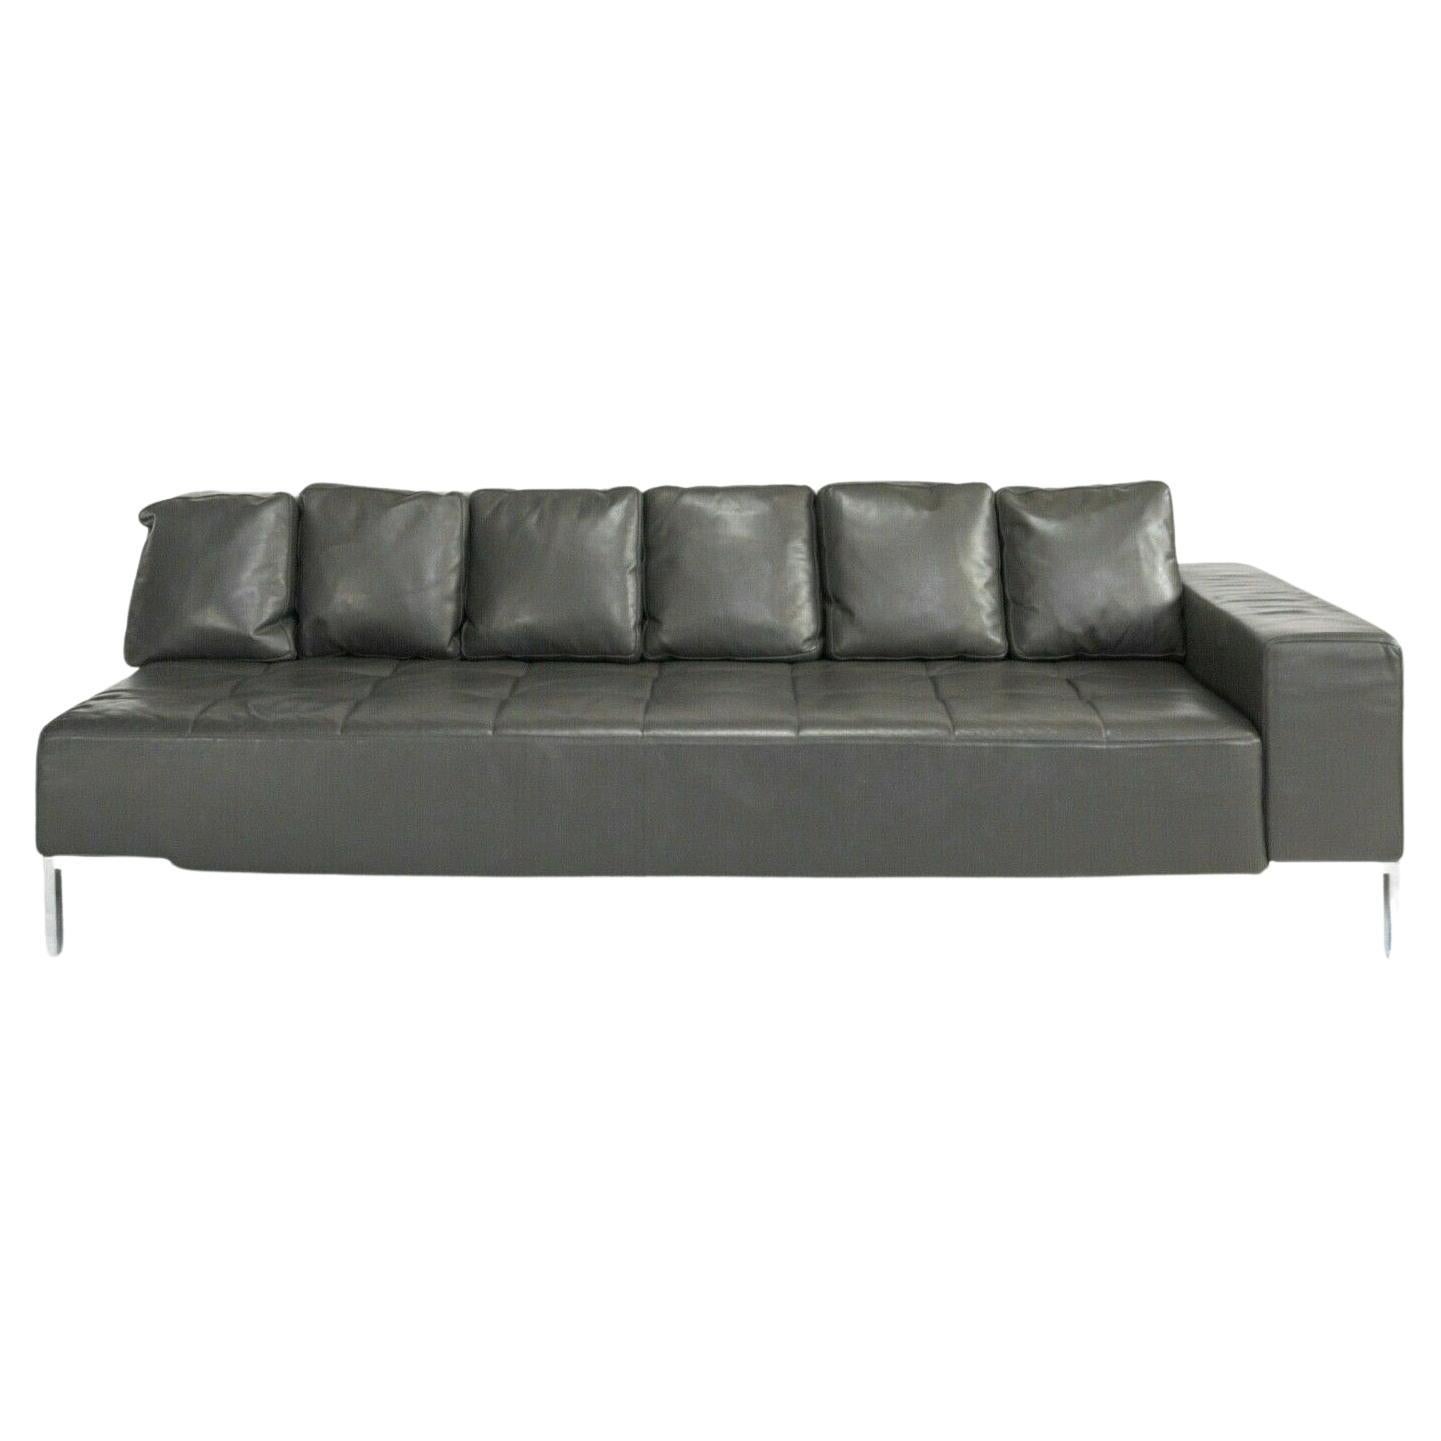 1999 Zanotta Alfa Grey Leather Sectional Modular Sofa by Emaf Progetti 2x Avail For Sale